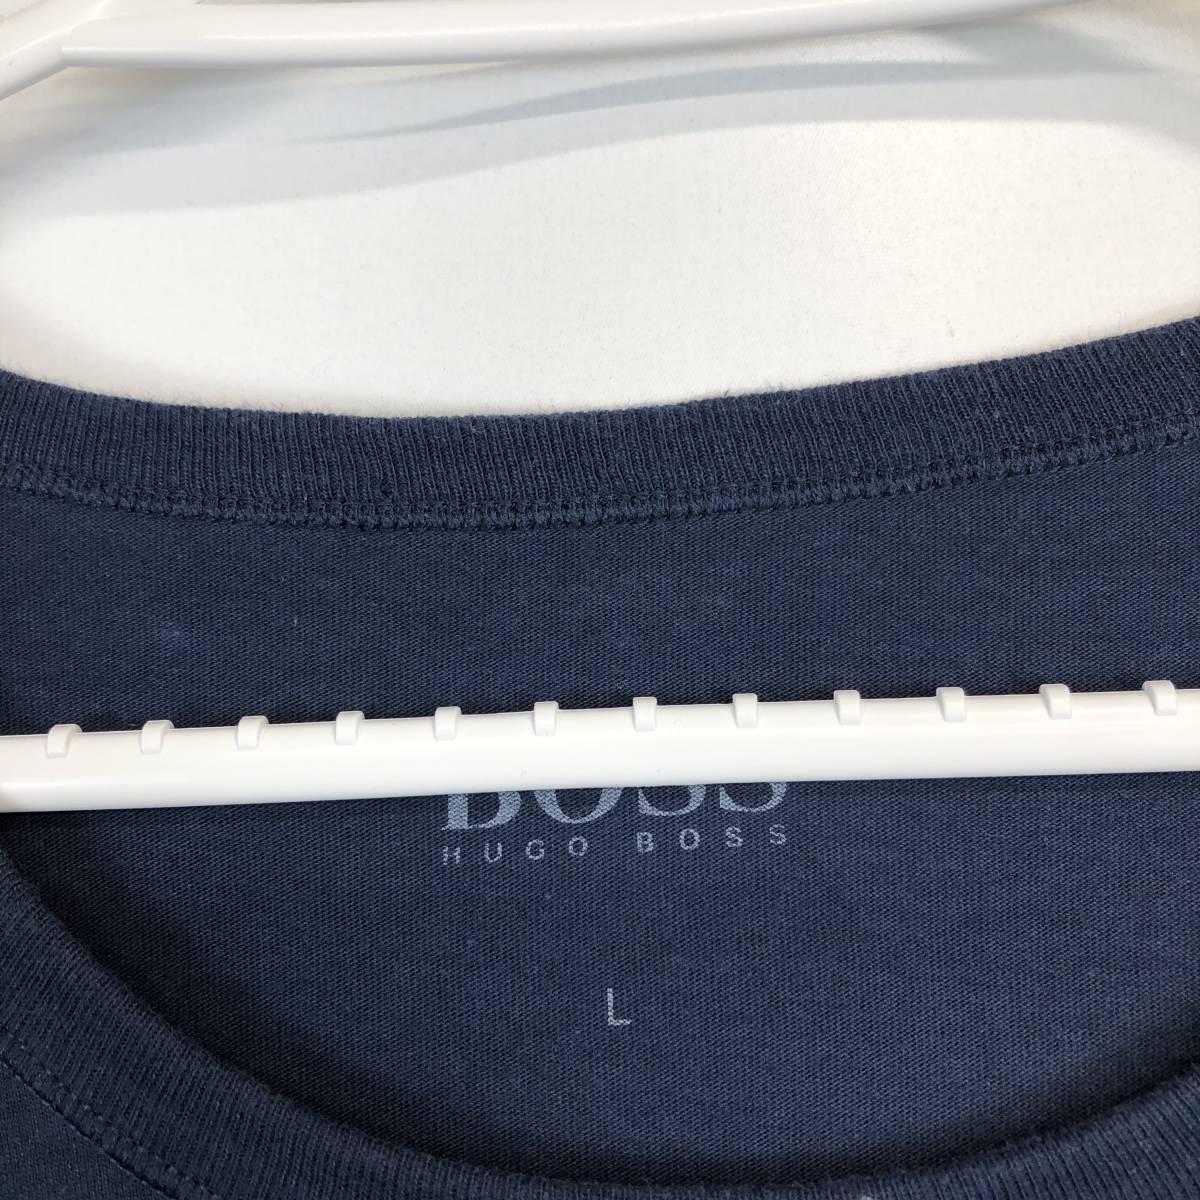 HUGO BOSS short sleeves T-shirt navy L size cotton 100